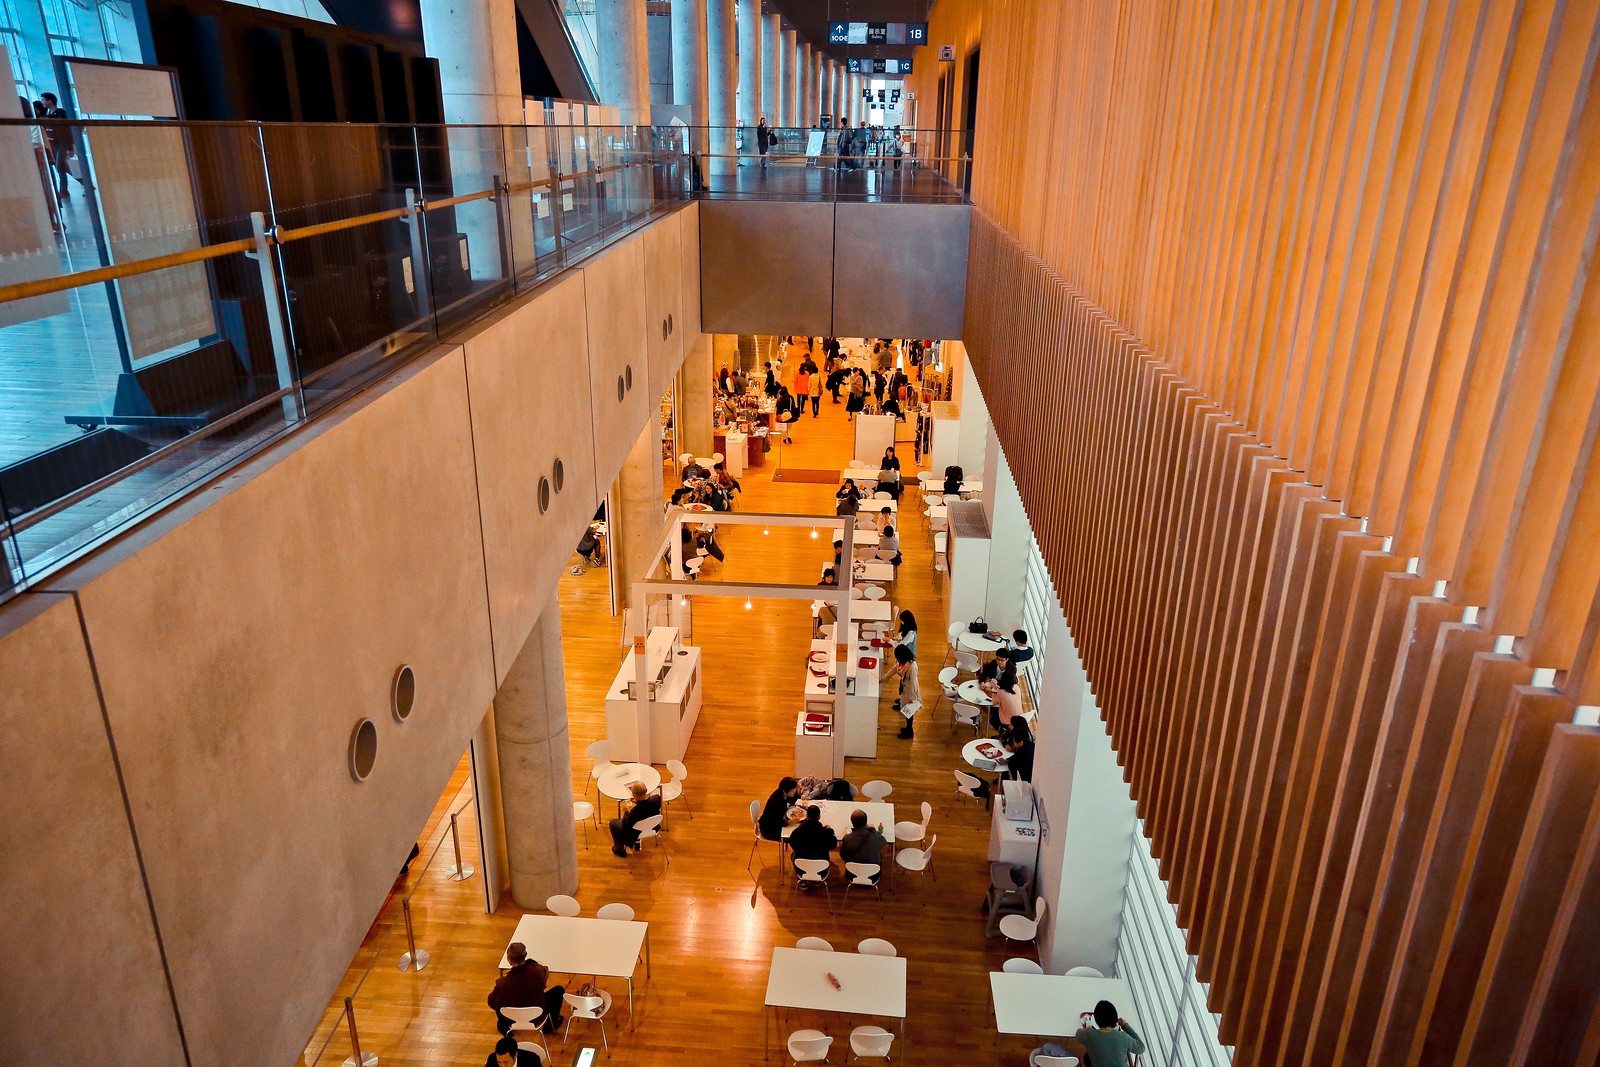 国立新美術館 THE NATIONAL ART CENTER, TOKYO (黑川紀章)